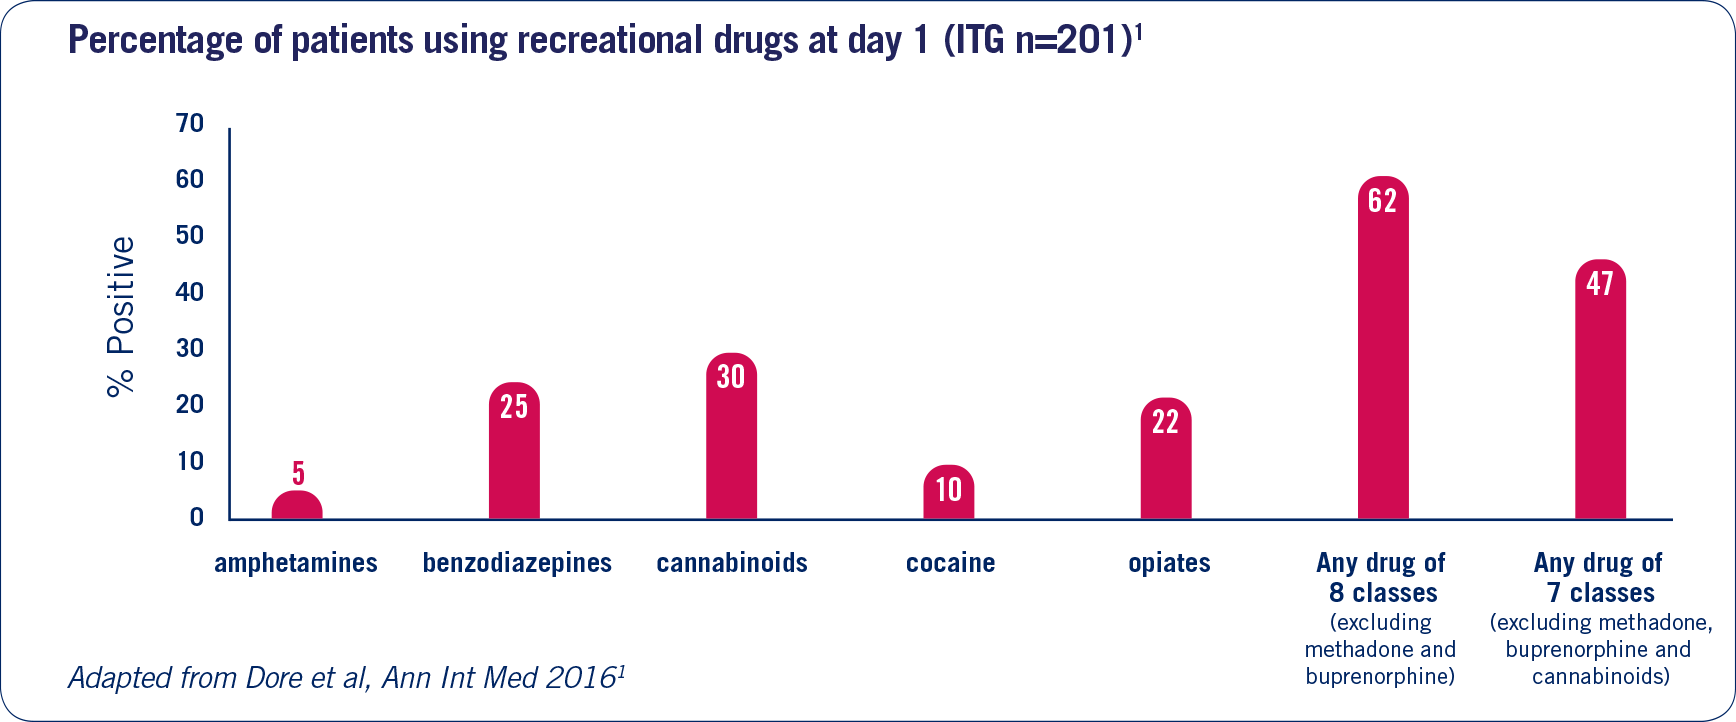 5% amphetamines, 25%, benzodiazepines, 30% cannabinoids, 10% cocaine, 22% opiates, 62% class 8 drugs, 47% class 7 drugs